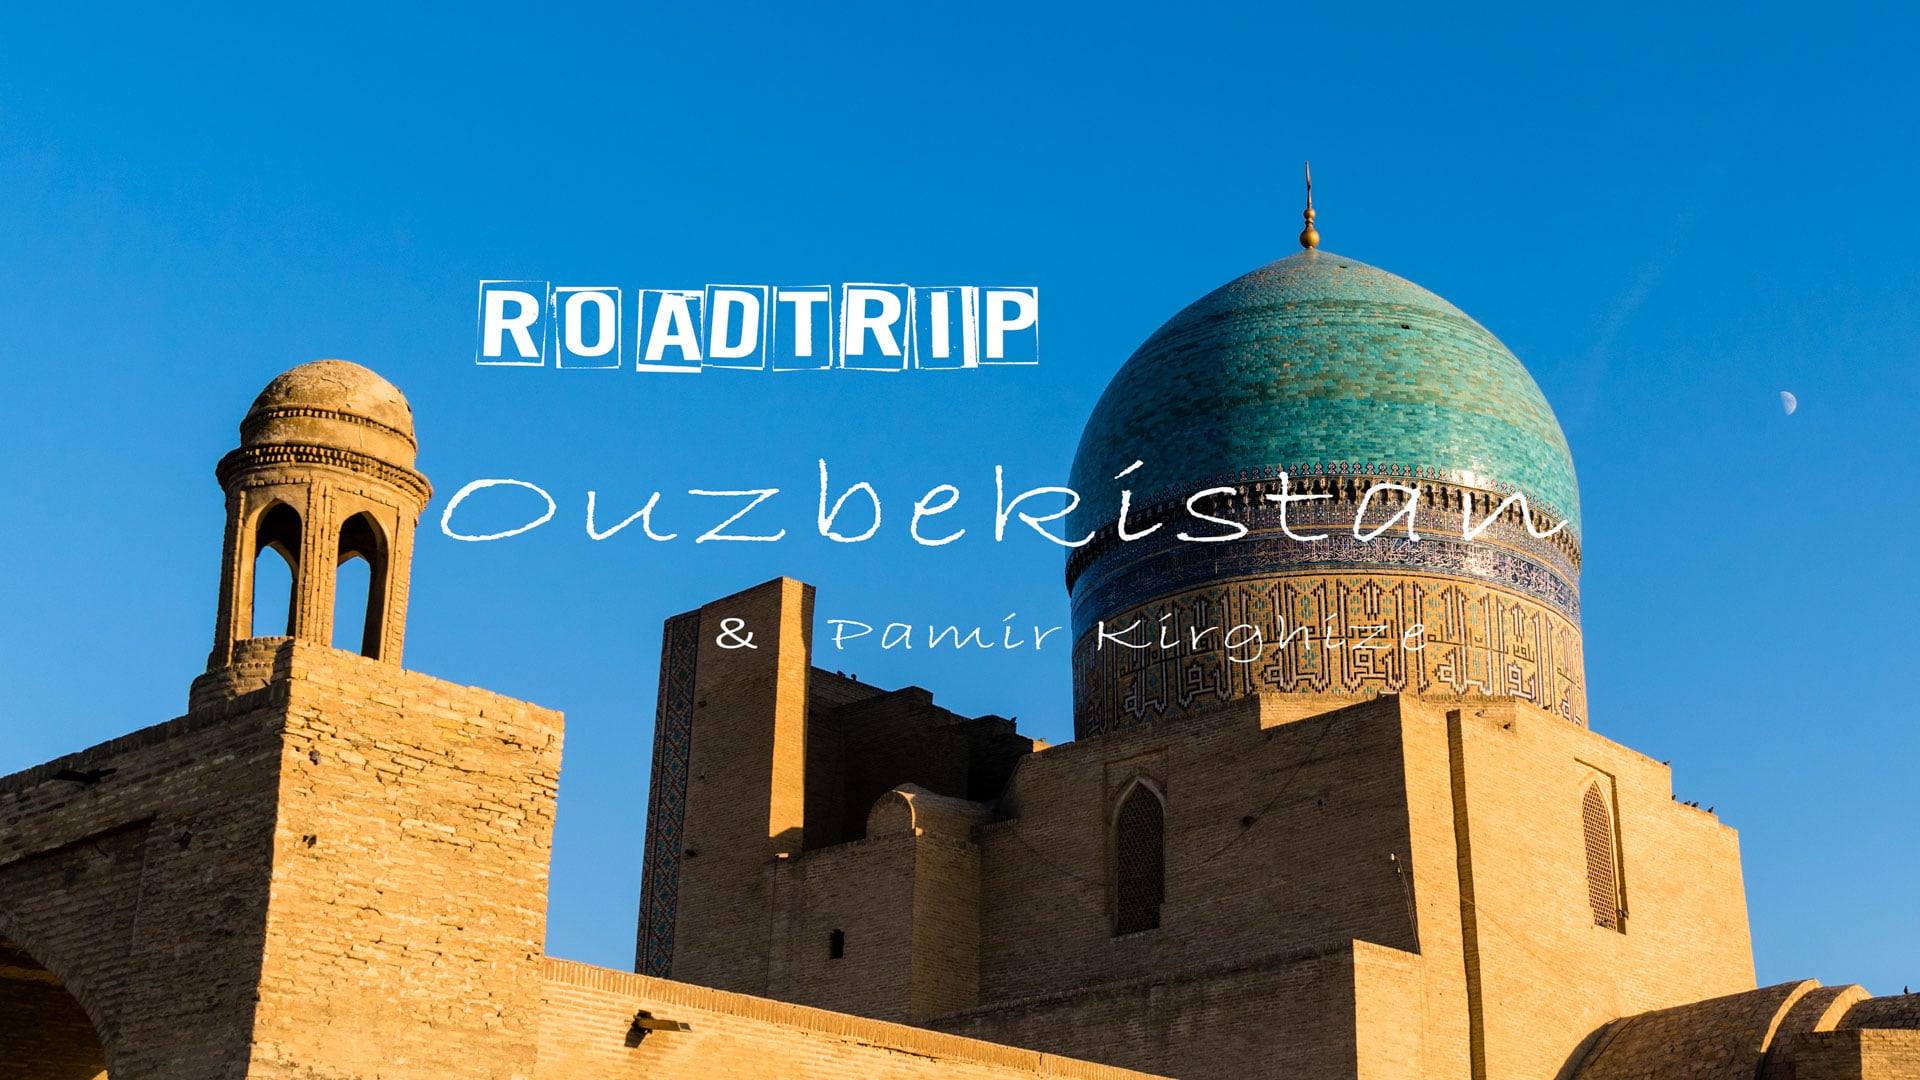 SerialHikers stop autostop world monde tour hitchhiking aventure adventure alternative travel voyage sans avion no fly asie centrale Ouzbékistan uzbekistan road trip newsletter